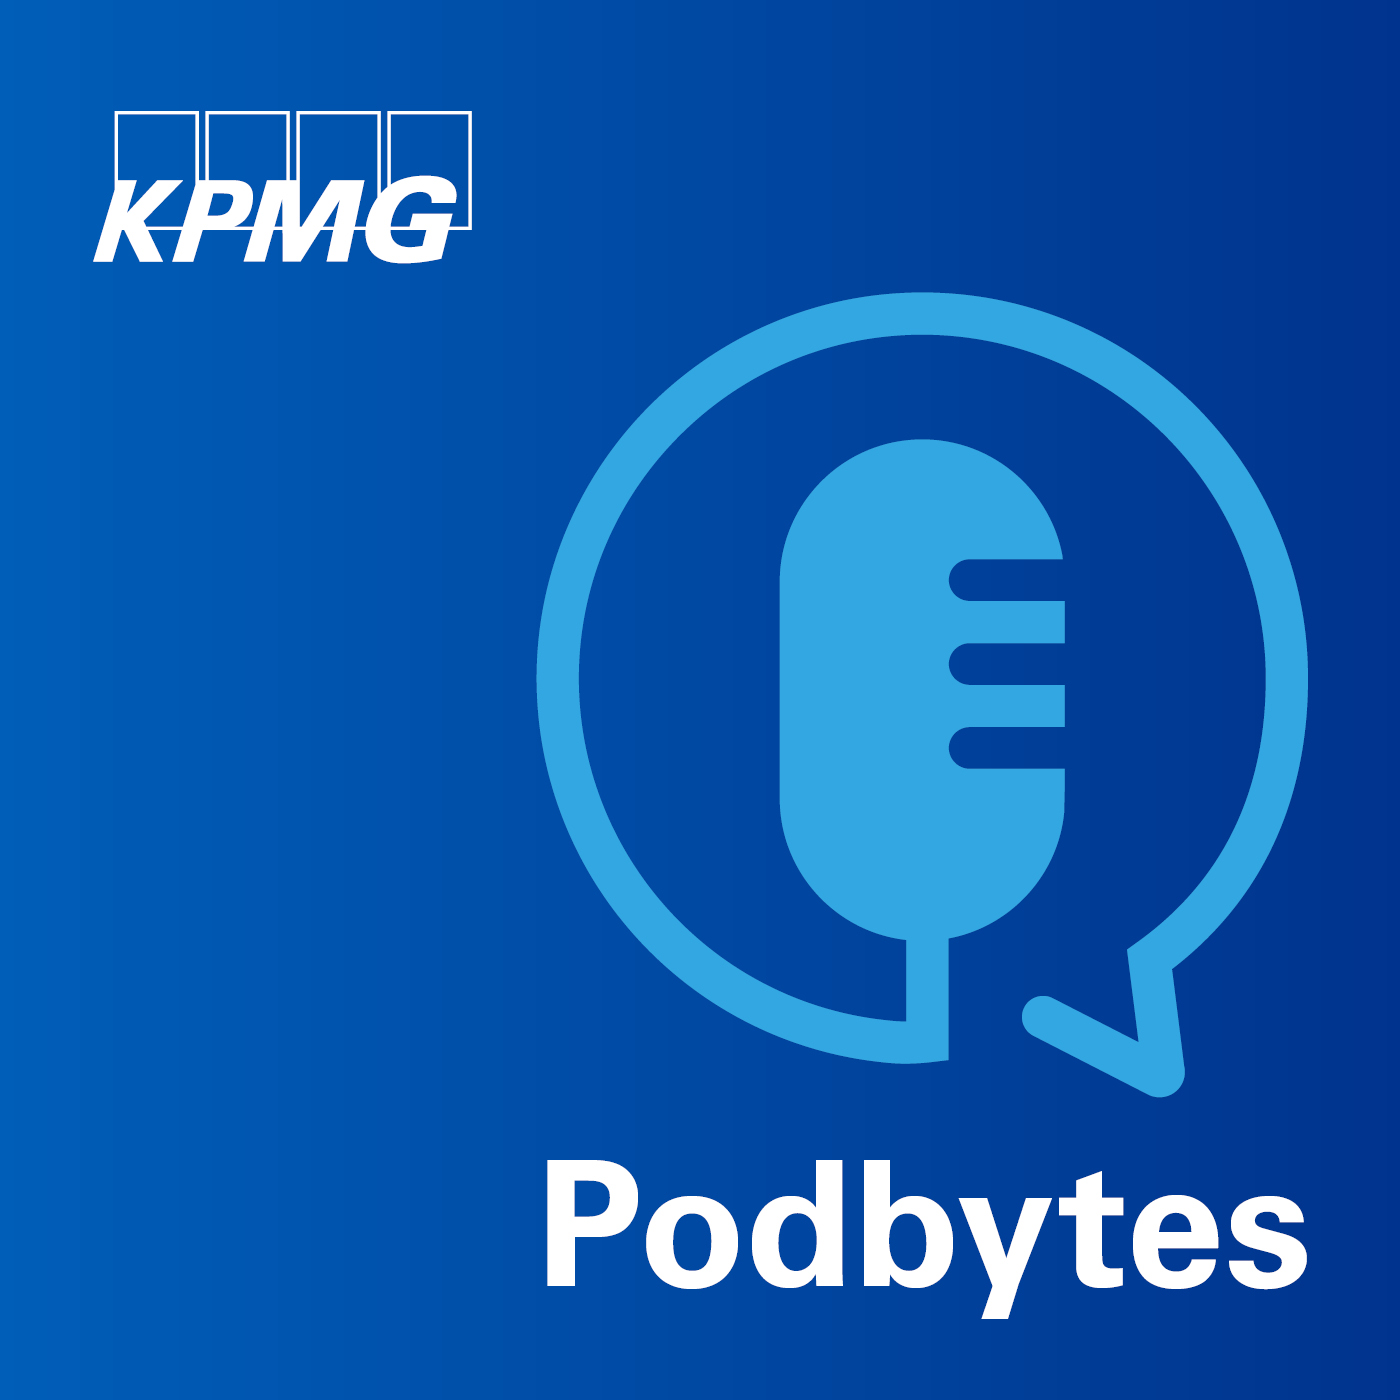 Podbytes: KPMG in Canada’s Podcast